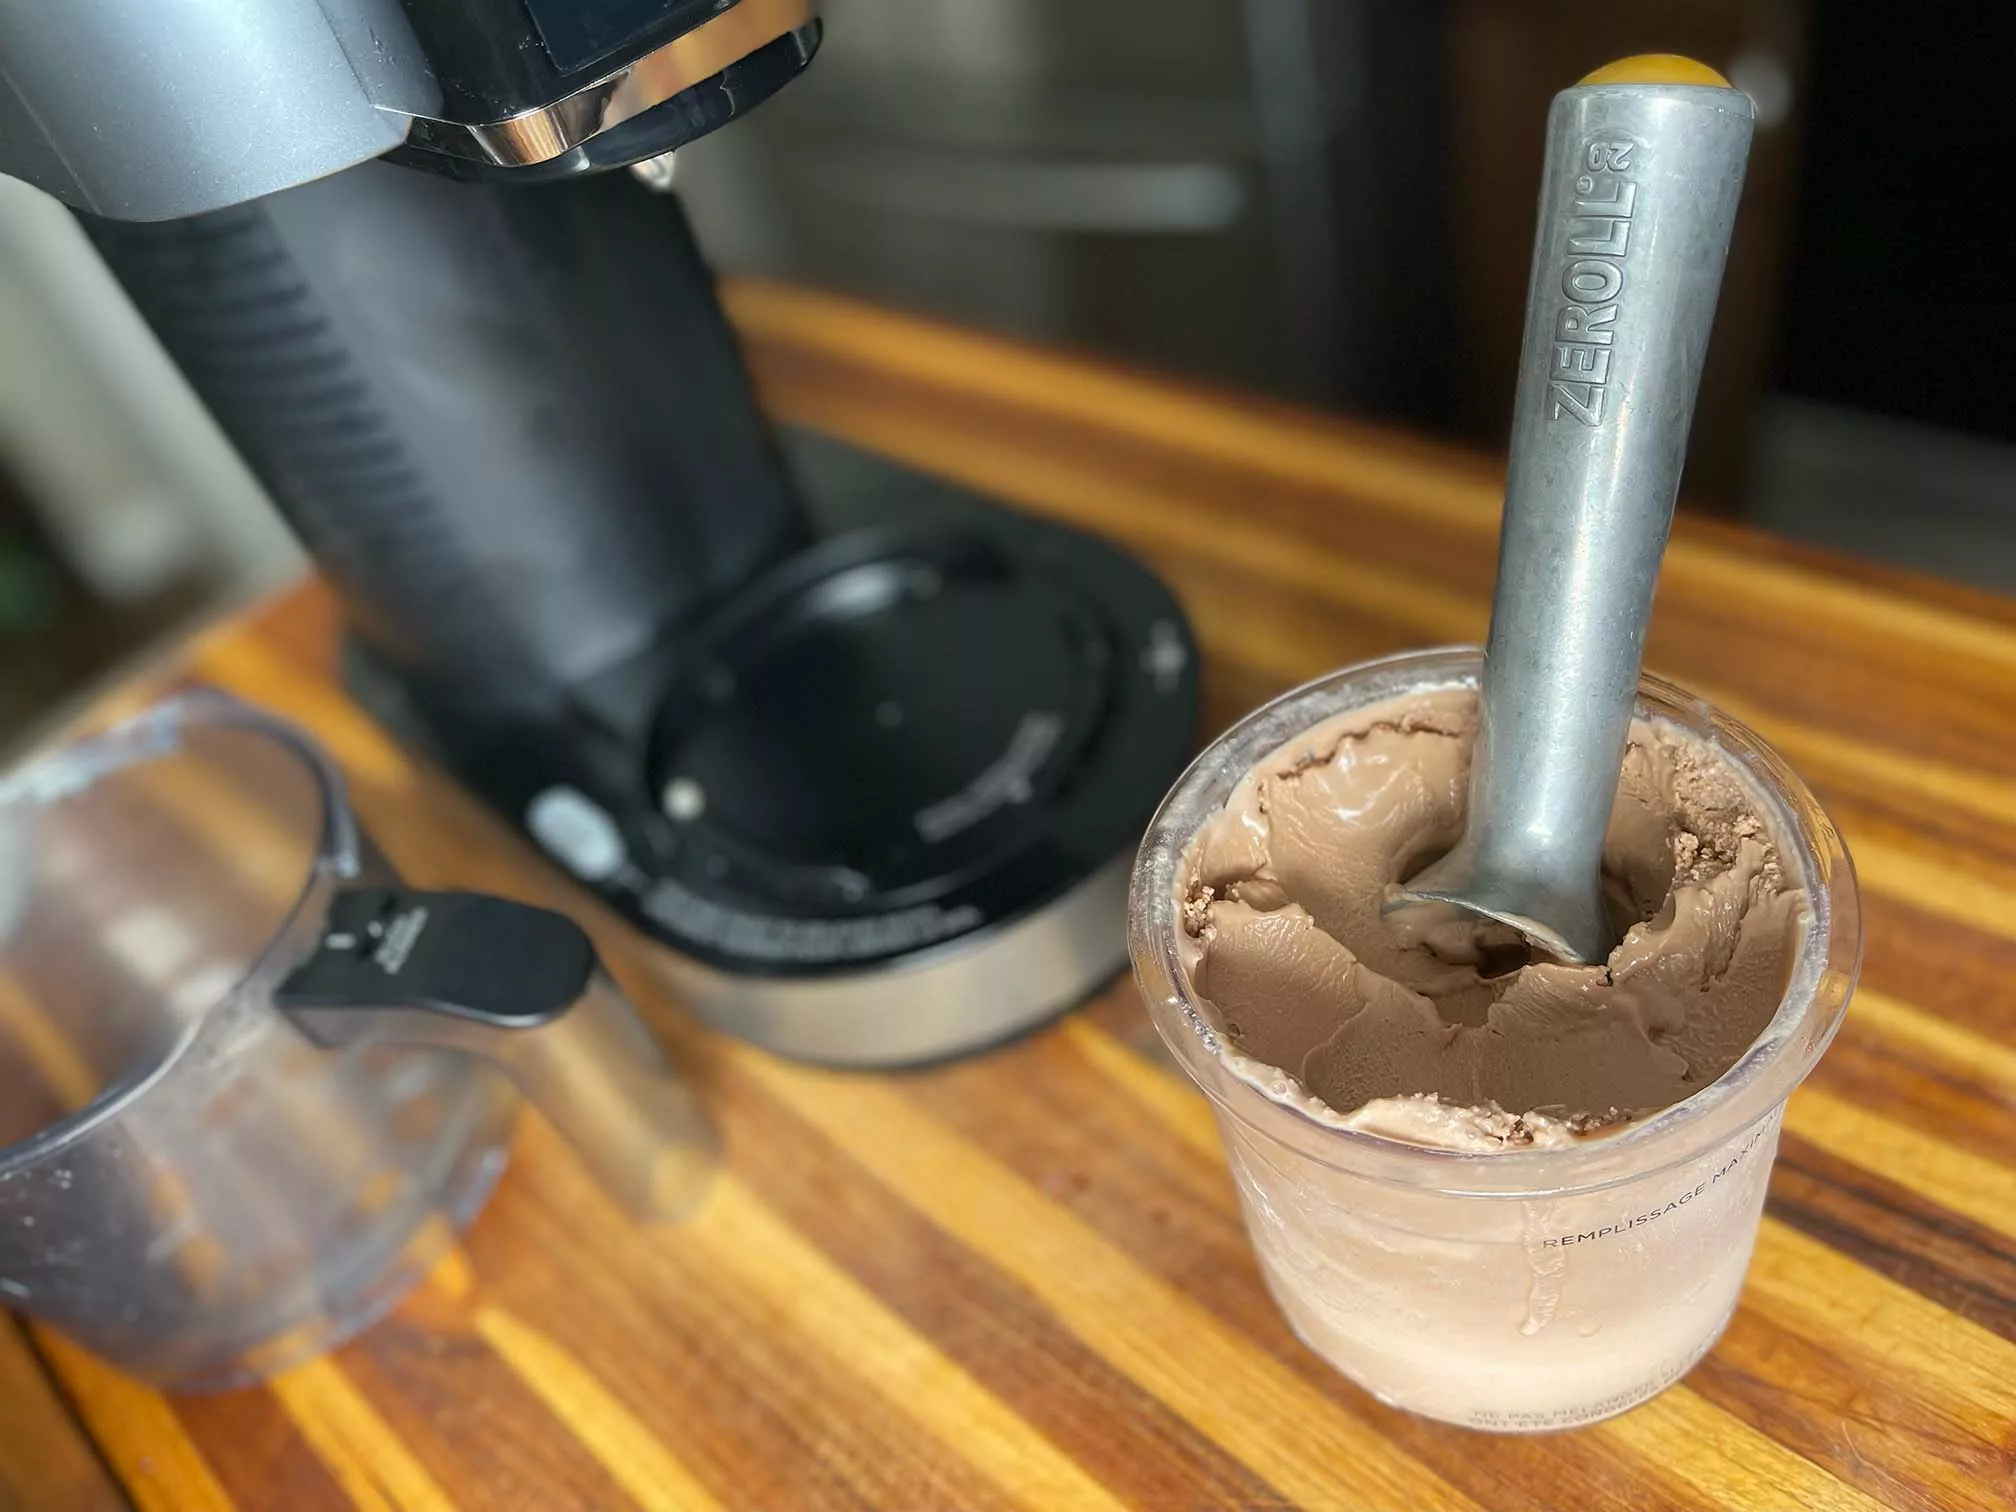 Ninja Creami Chocolate Ice Cream - The Midwest Kitchen Blog